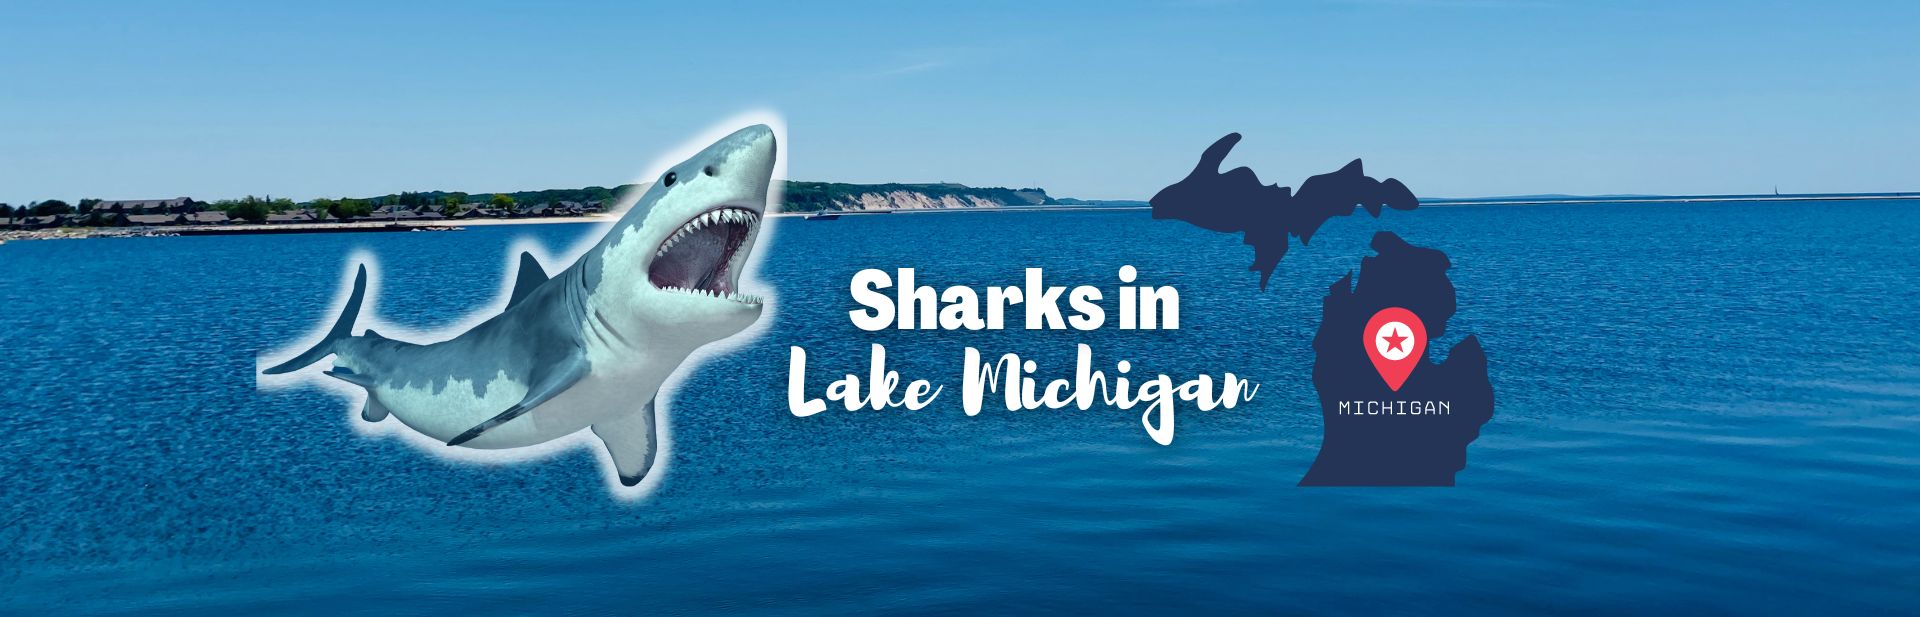 Sharks In Lake Michigan: True Story or Urban Myth?